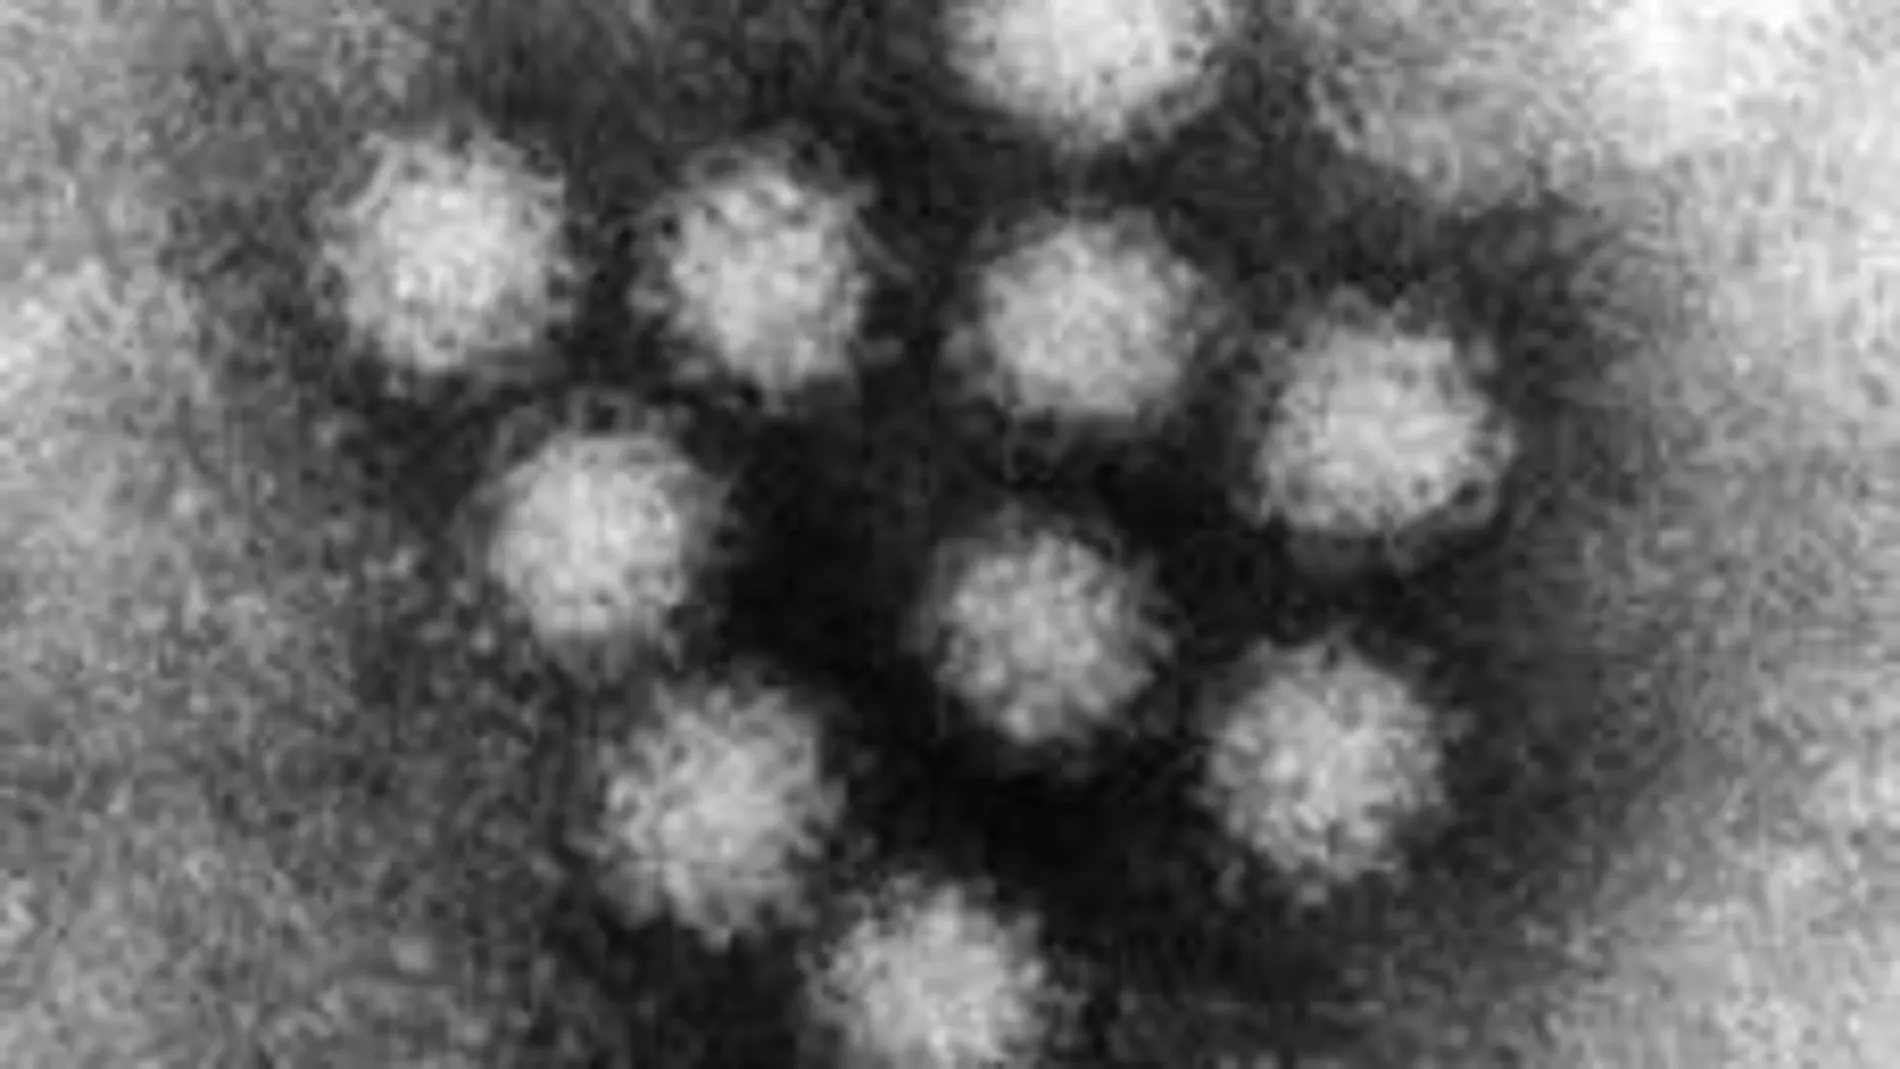 El norovirus visto al microscopio